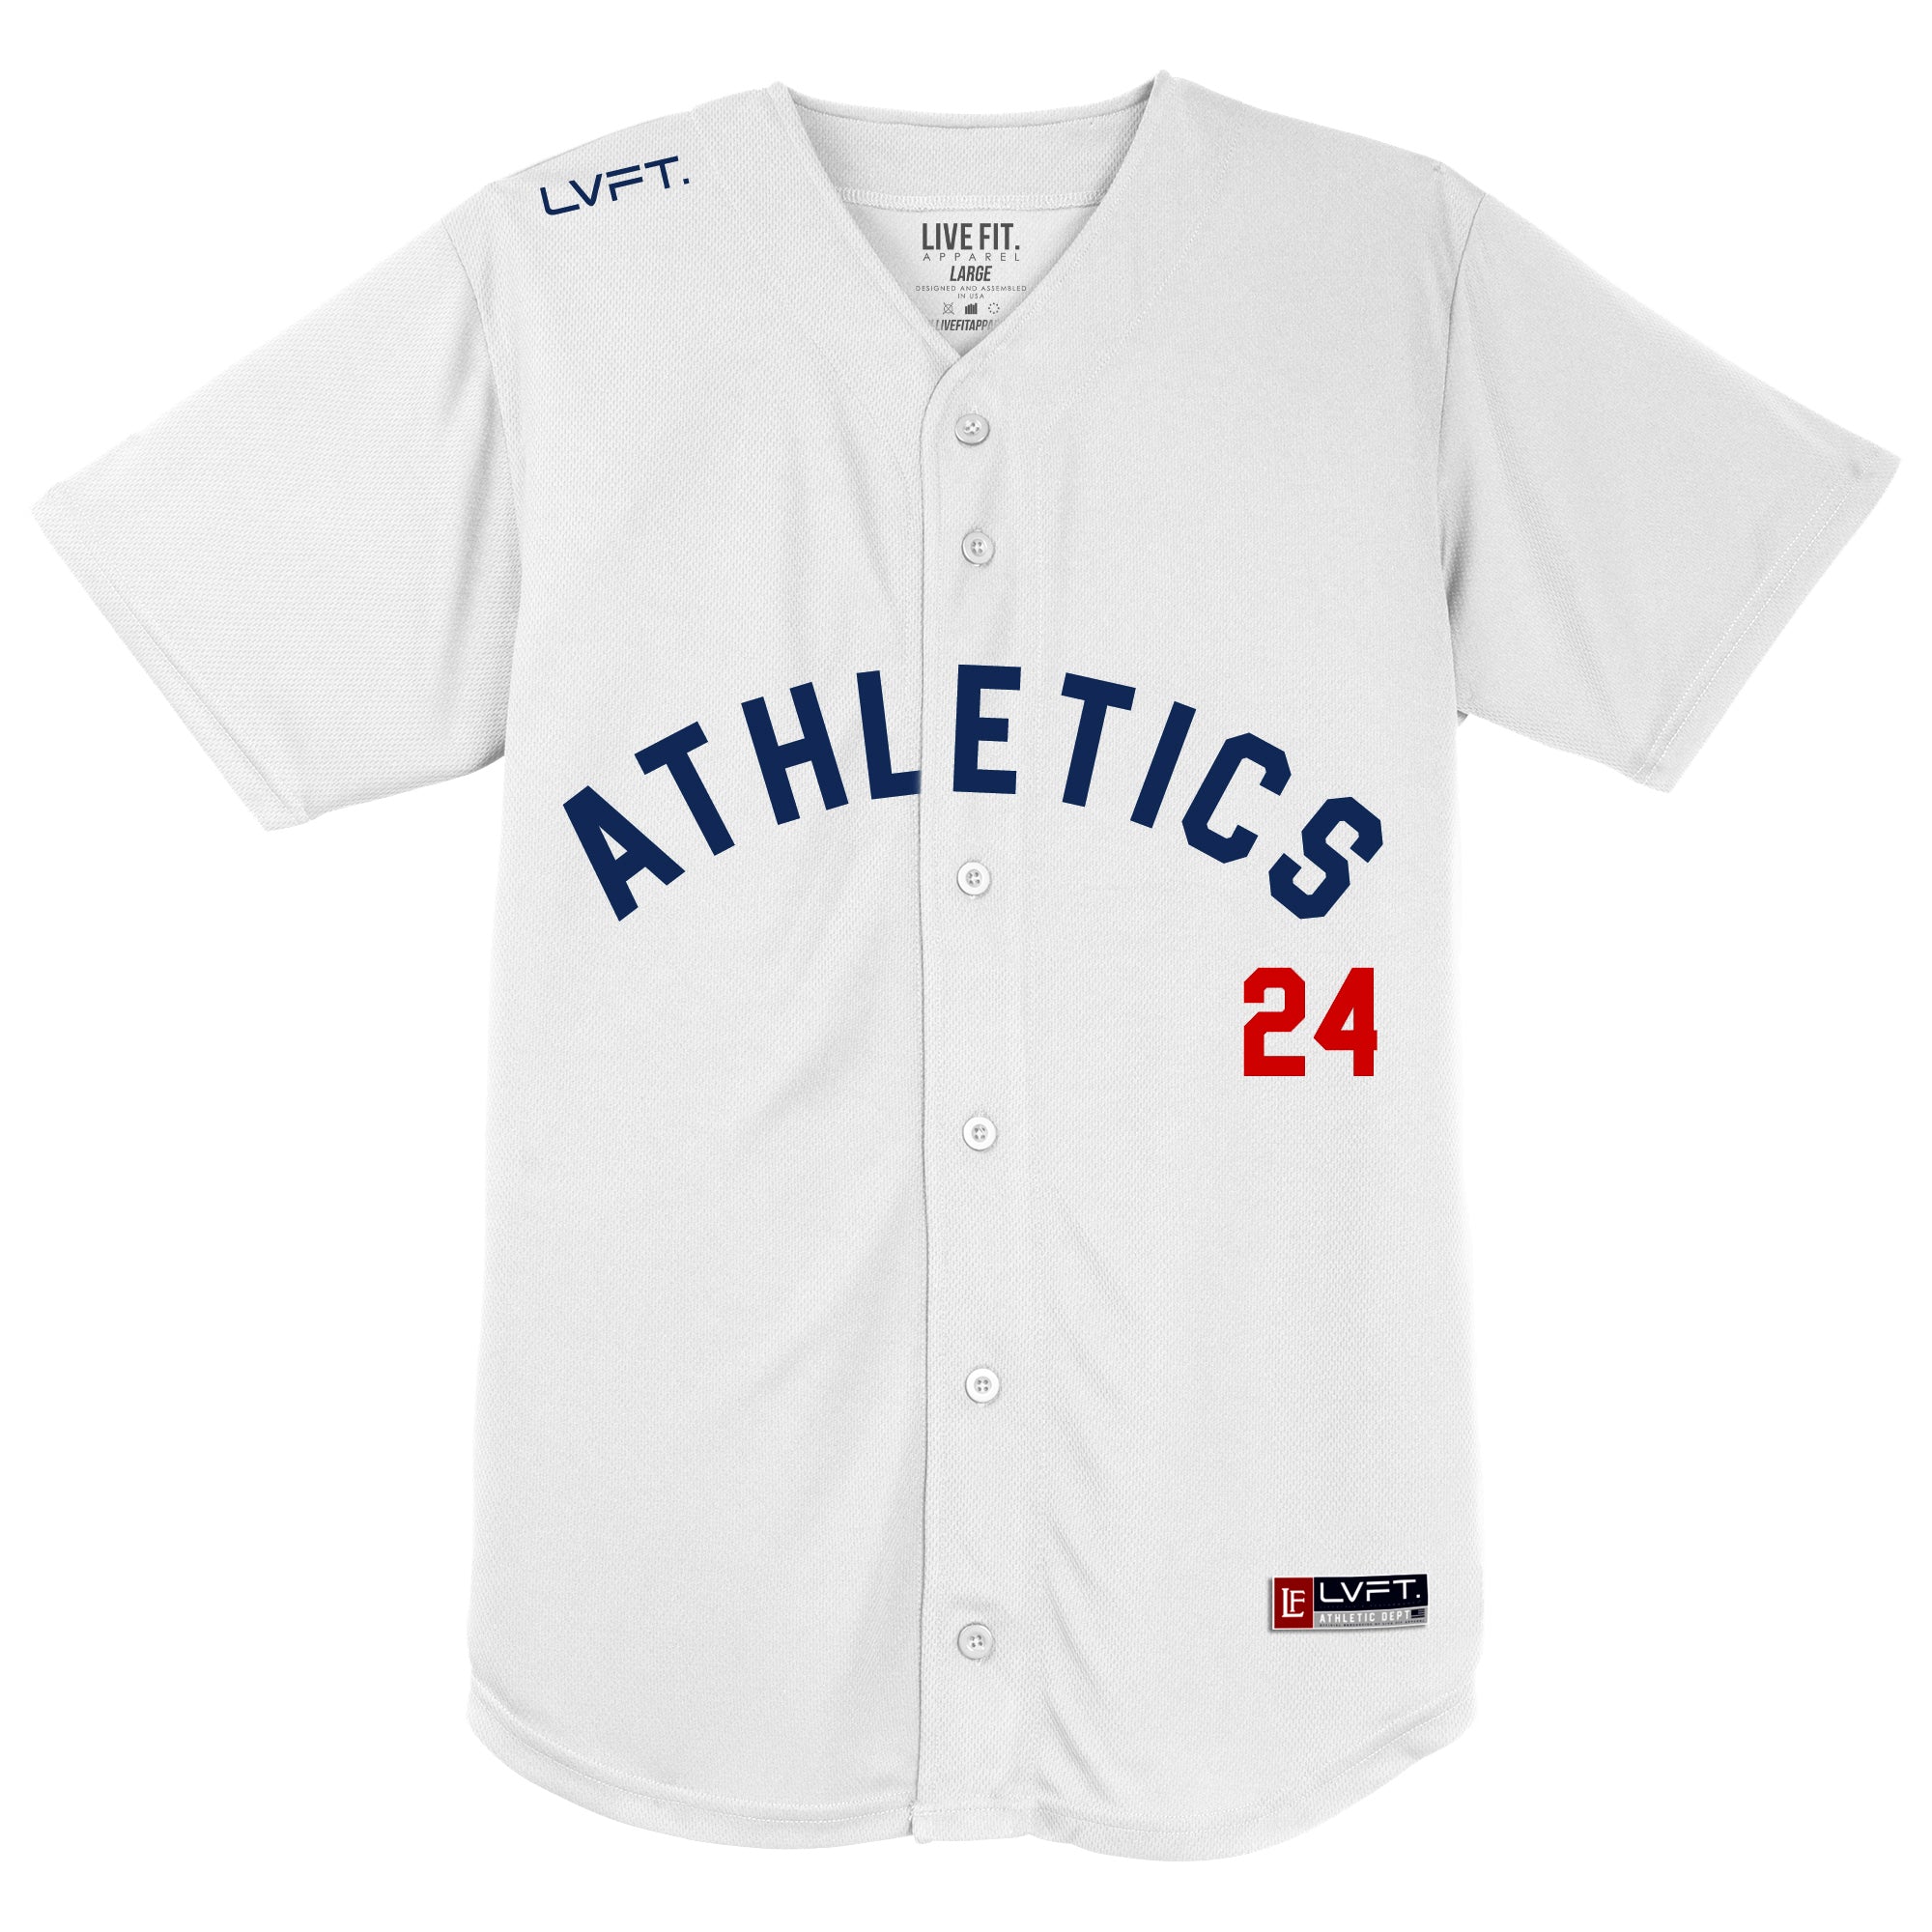 Louis Vuitton White Baseball Jersey Clothes Sport For Men Women